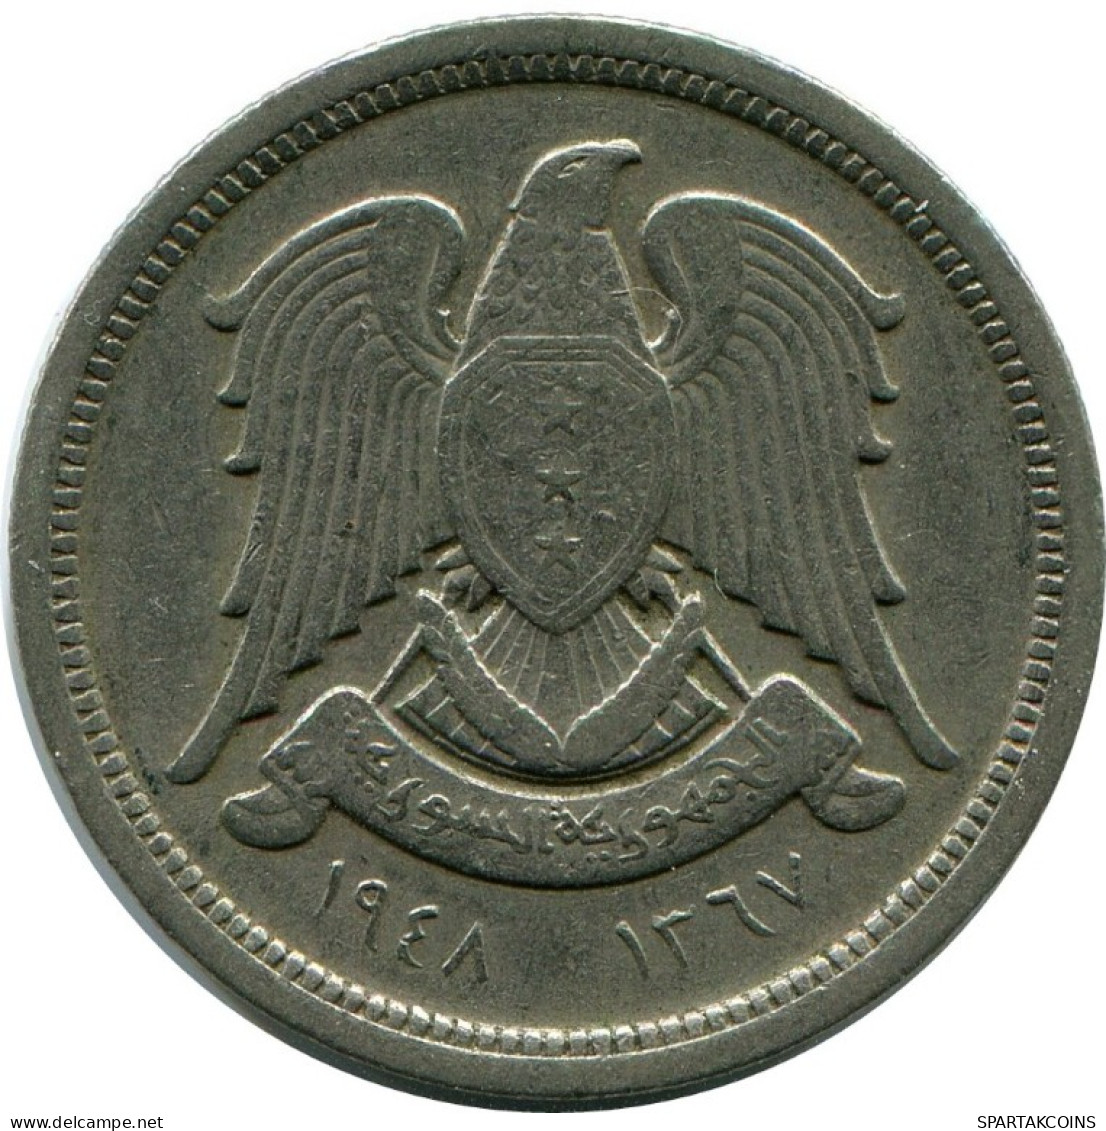 10 QIRSH 1948 SIRIA SYRIA Islámico Moneda #AK200.E.A - Syrië